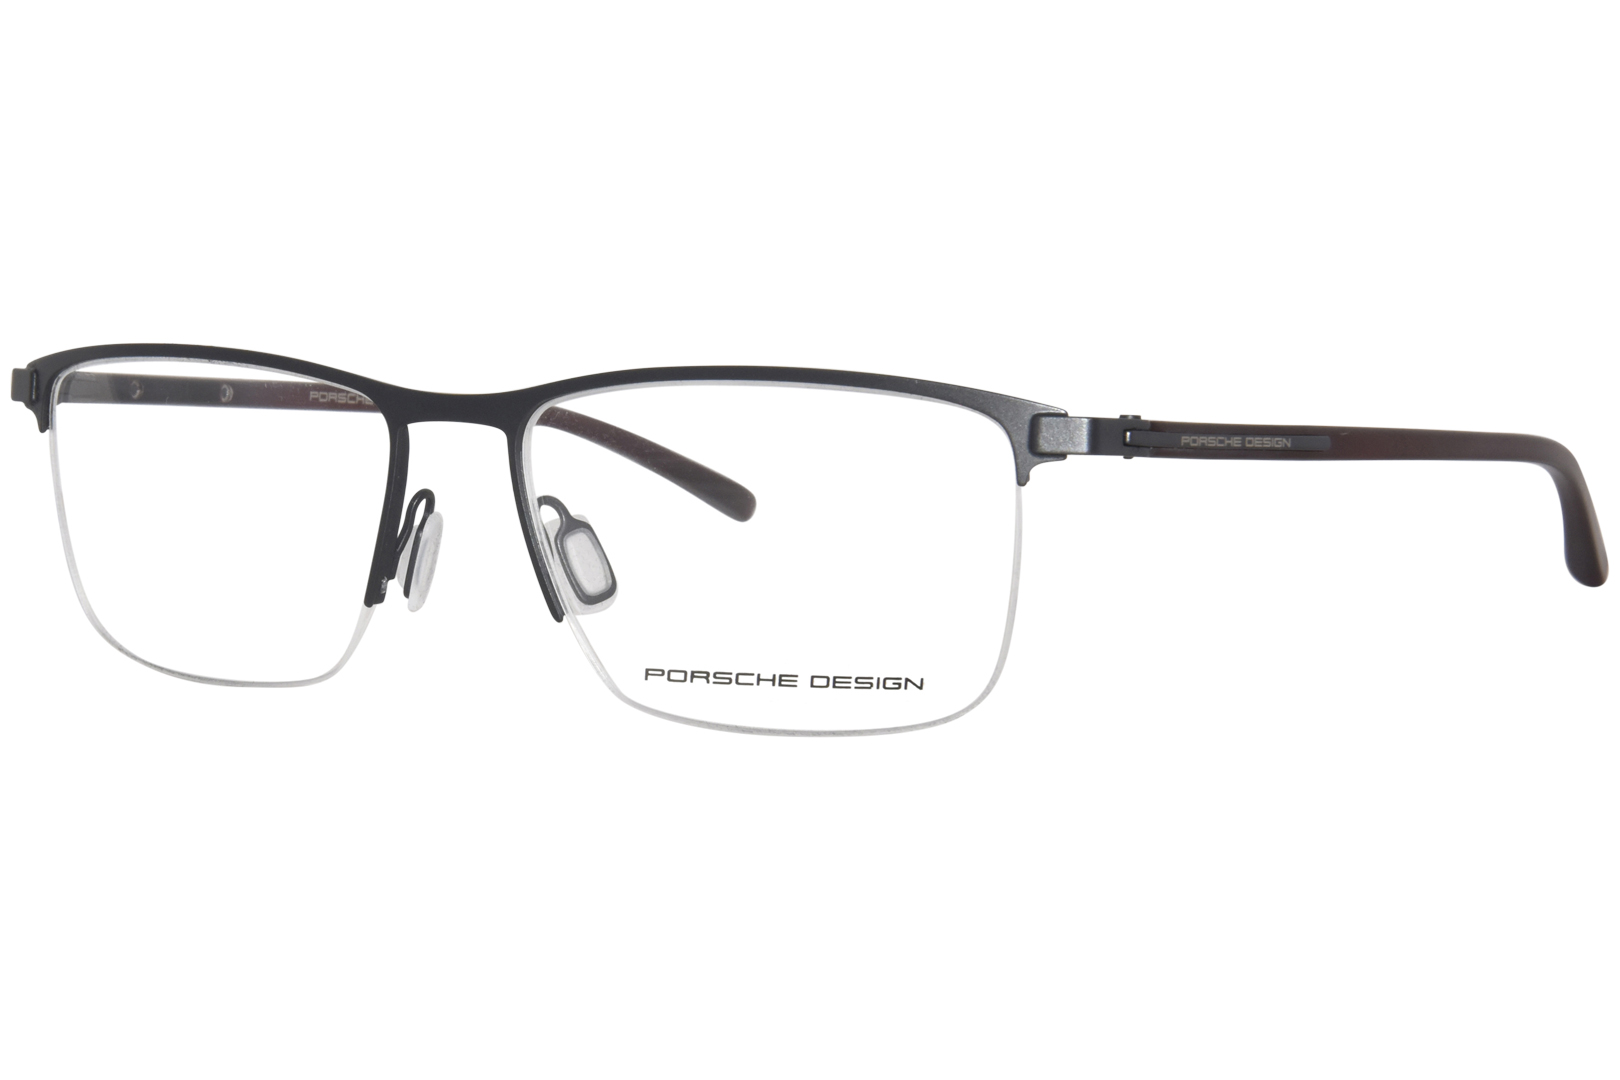 Porsche Design P8371 Eyeglasses Men's Semi Rim Rectangle Shape ...